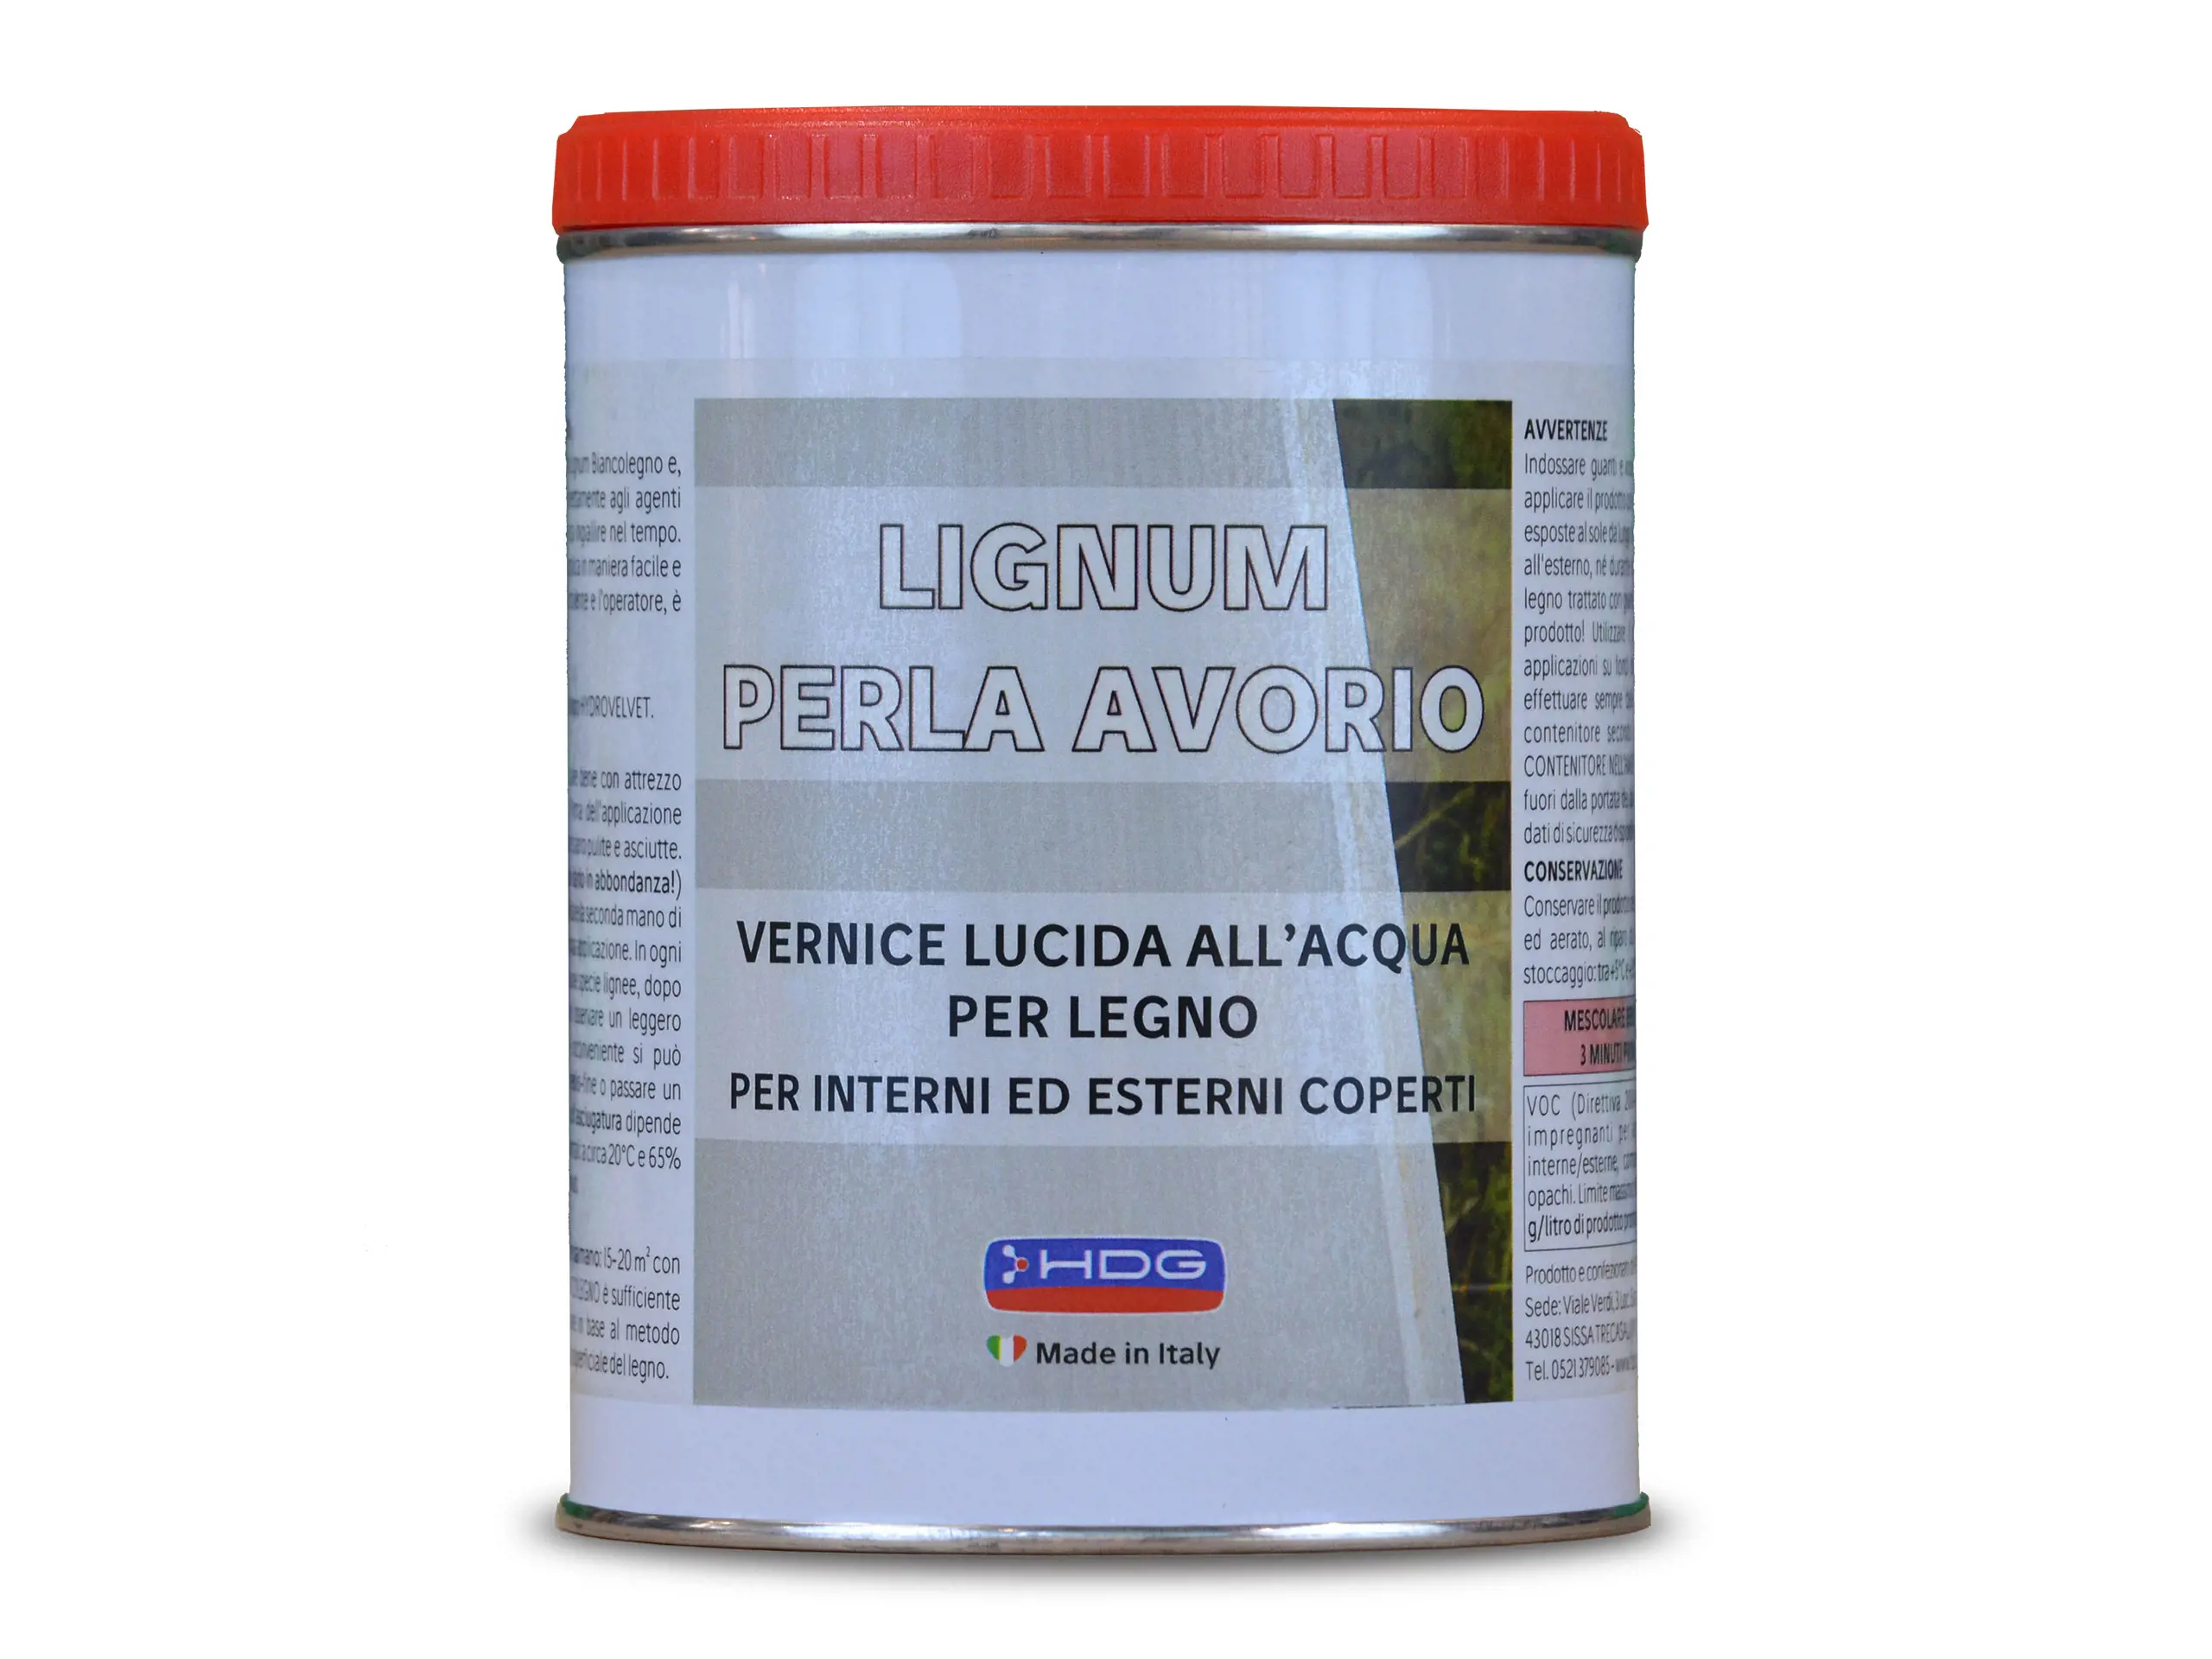 Lignum-perla-avorio-1-litro.jpg